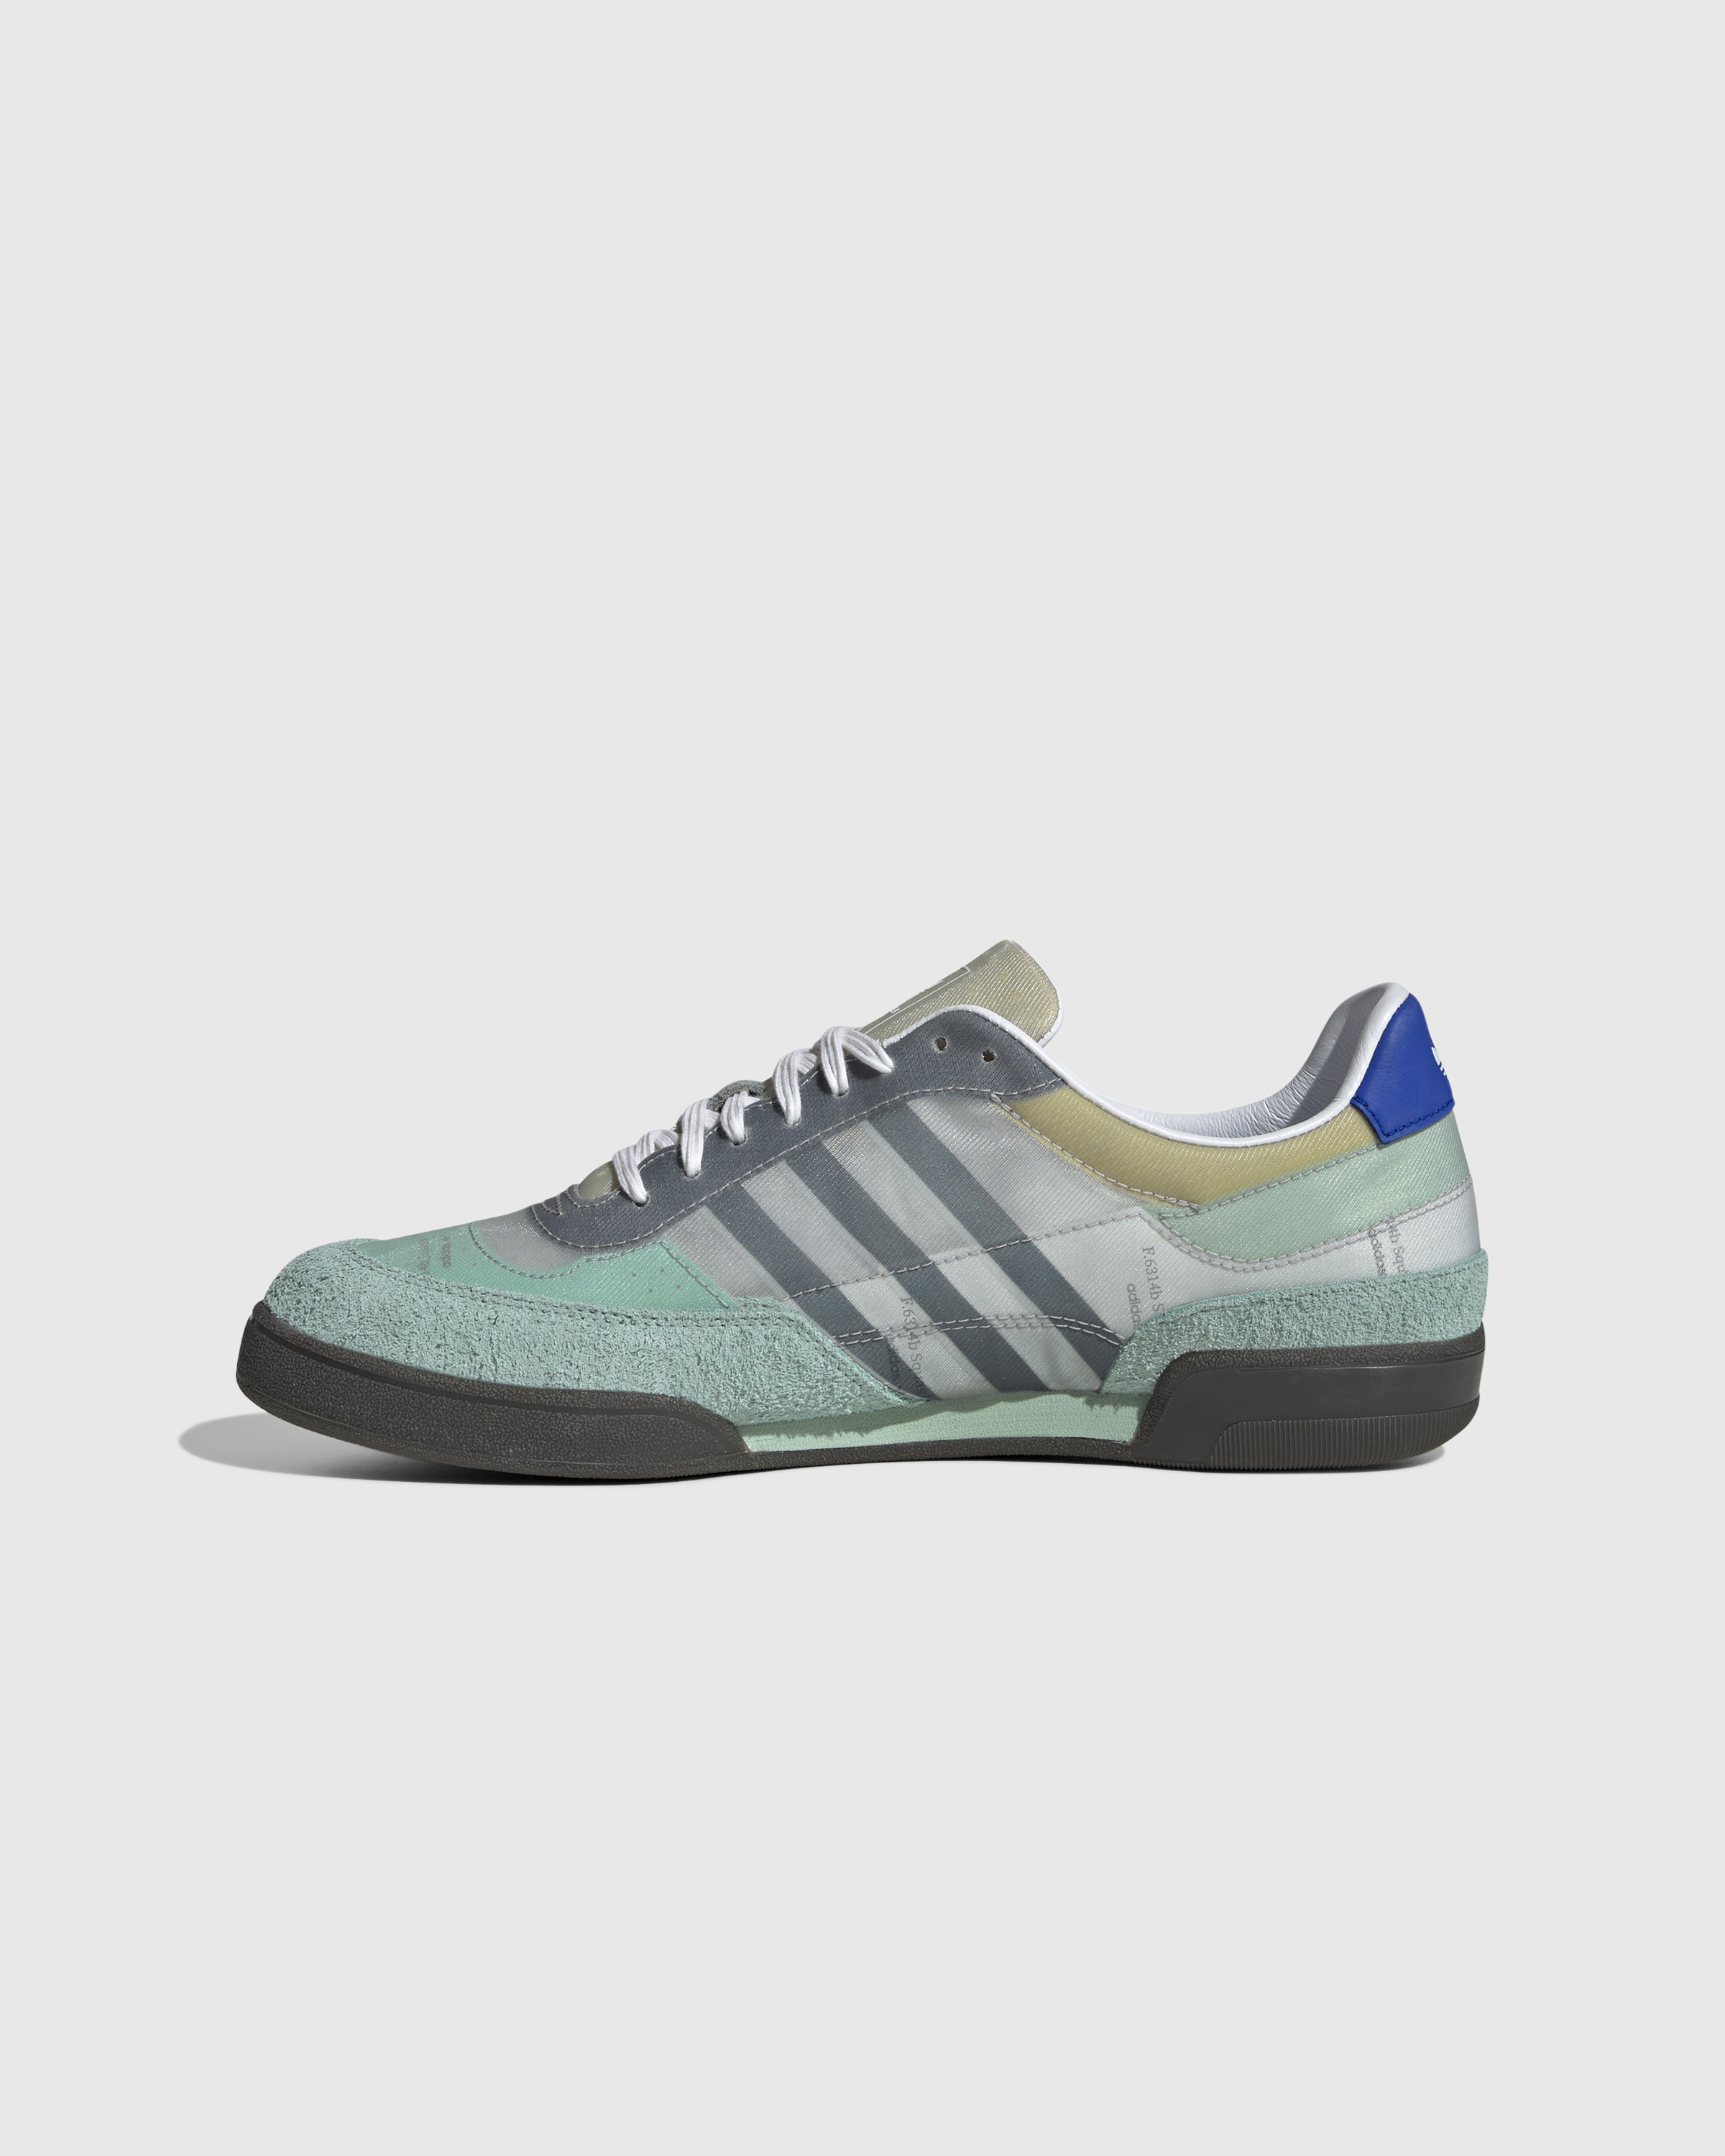 Adidas x Craig Green – Squash Polta Akh Green/Core White/Gum - Low Top Sneakers - Green - Image 2